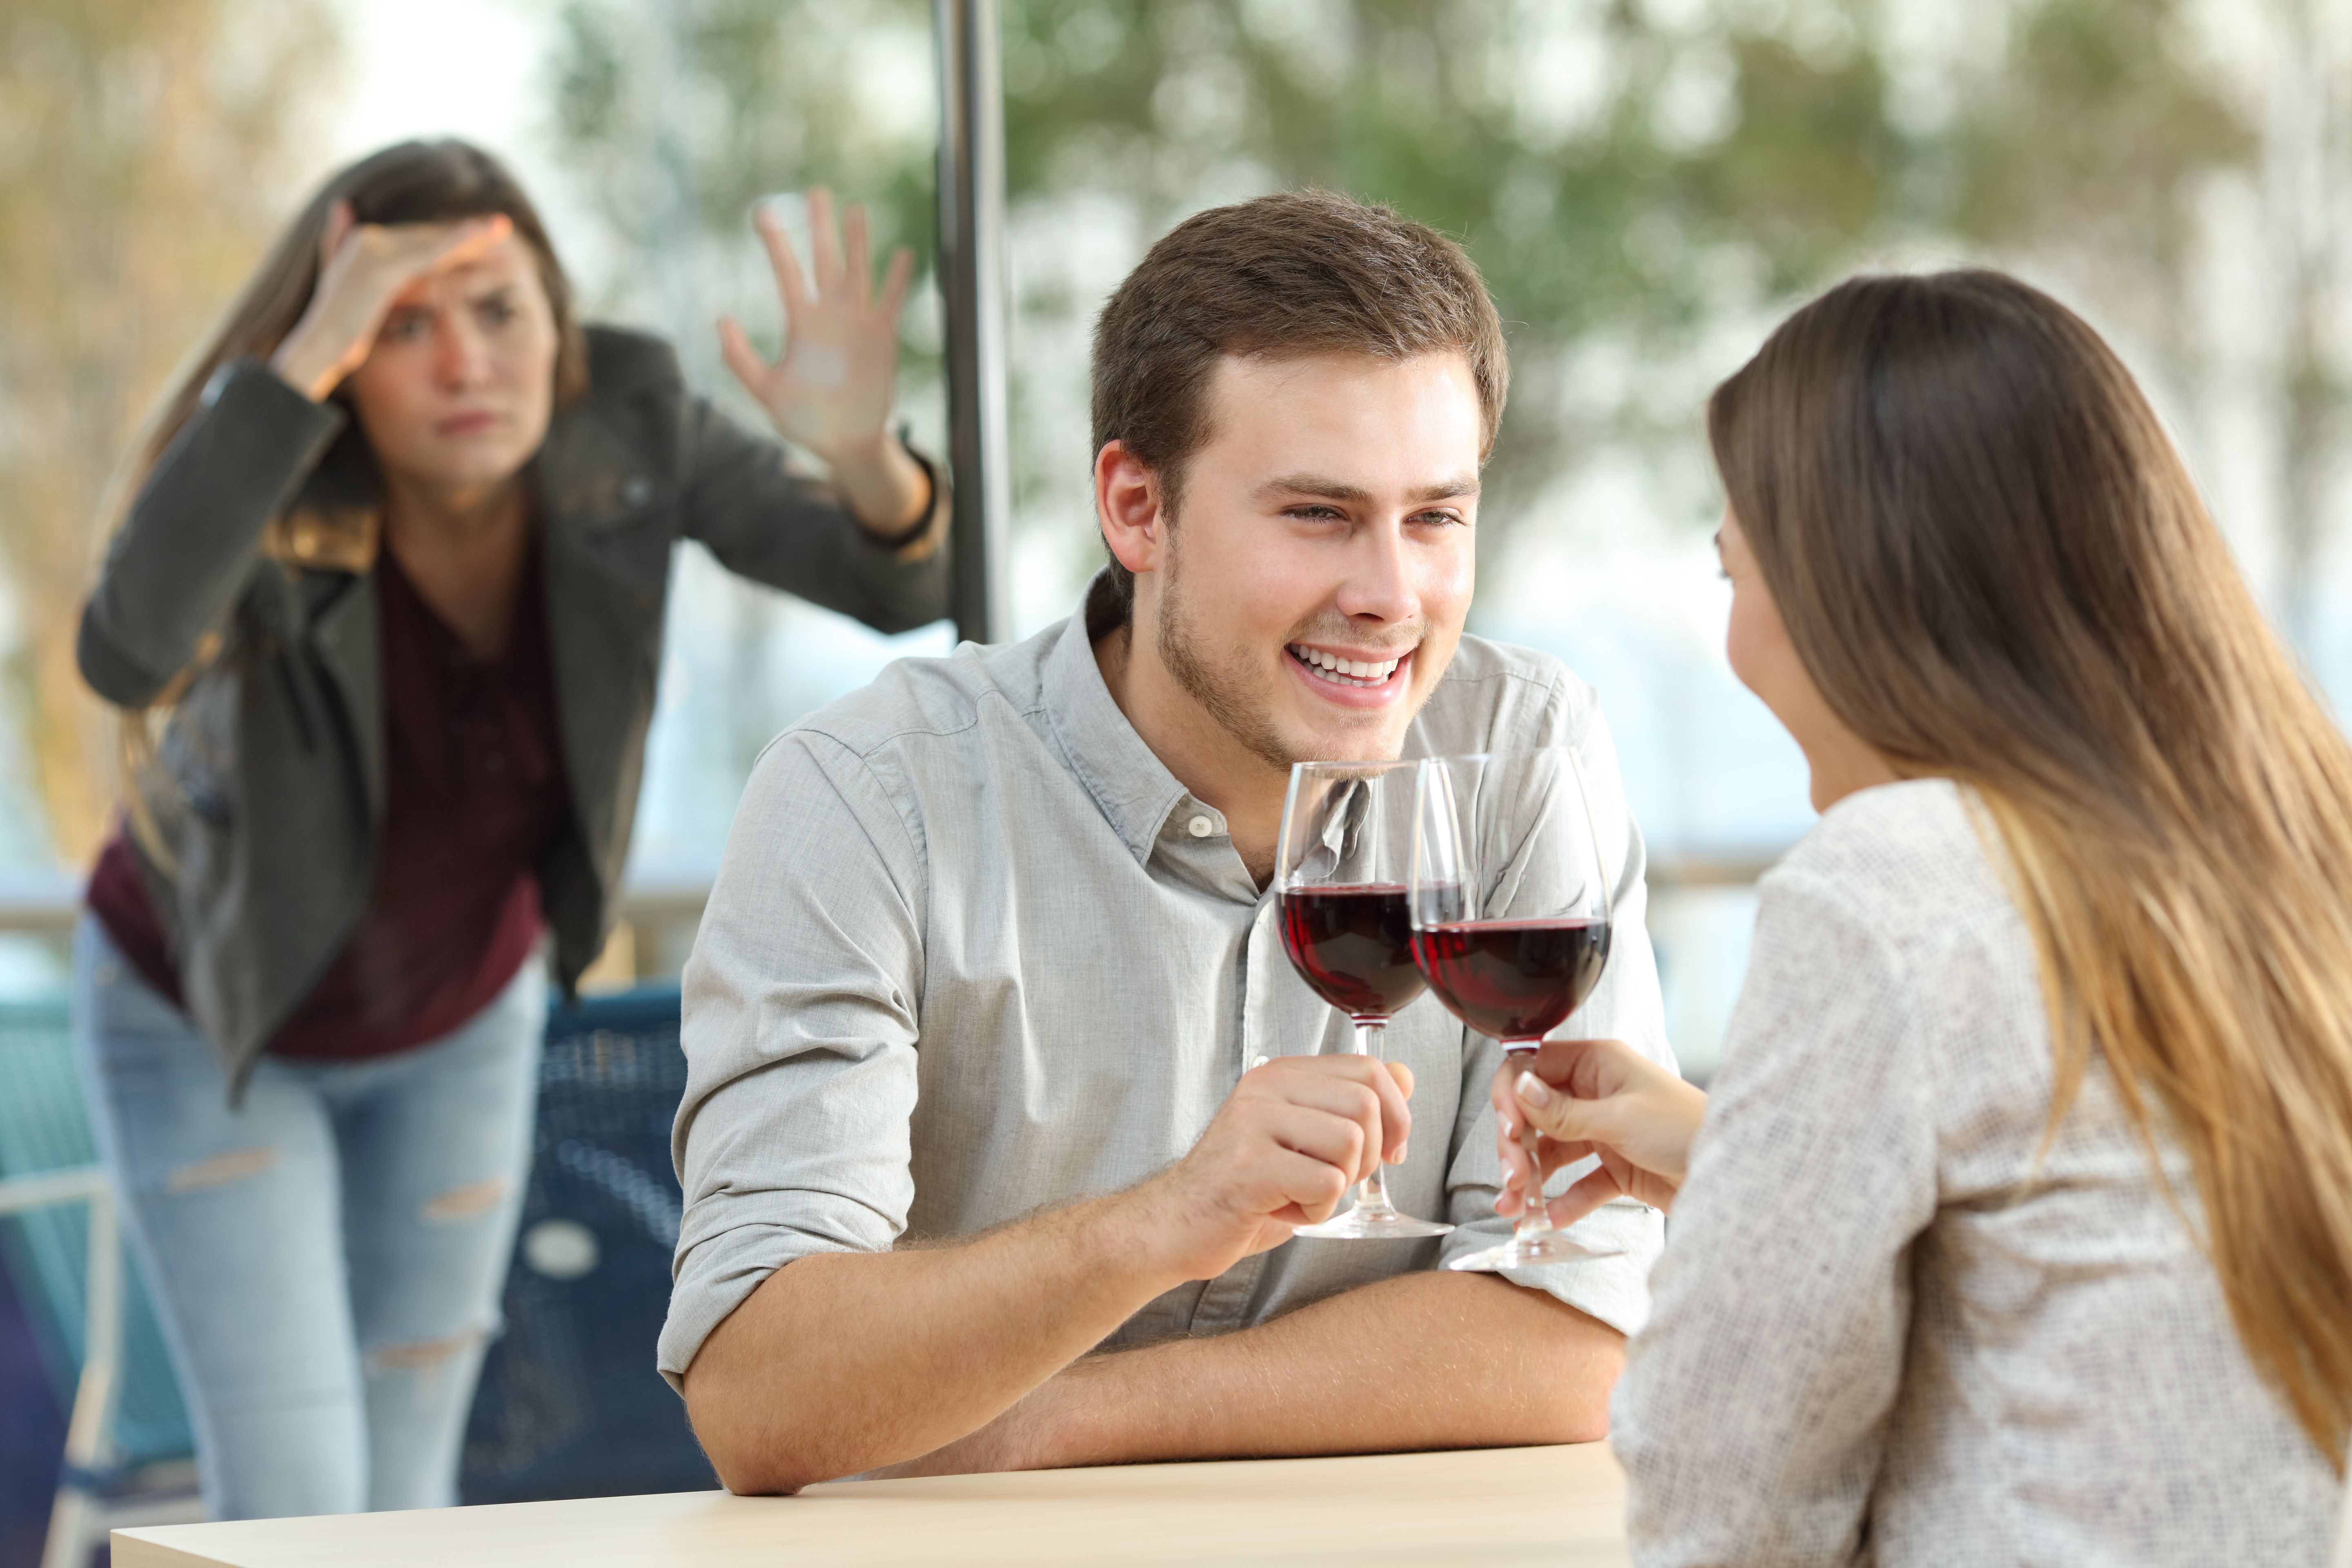 A woman found her partner cheating inside a restaurant. | Source: Shutterstock